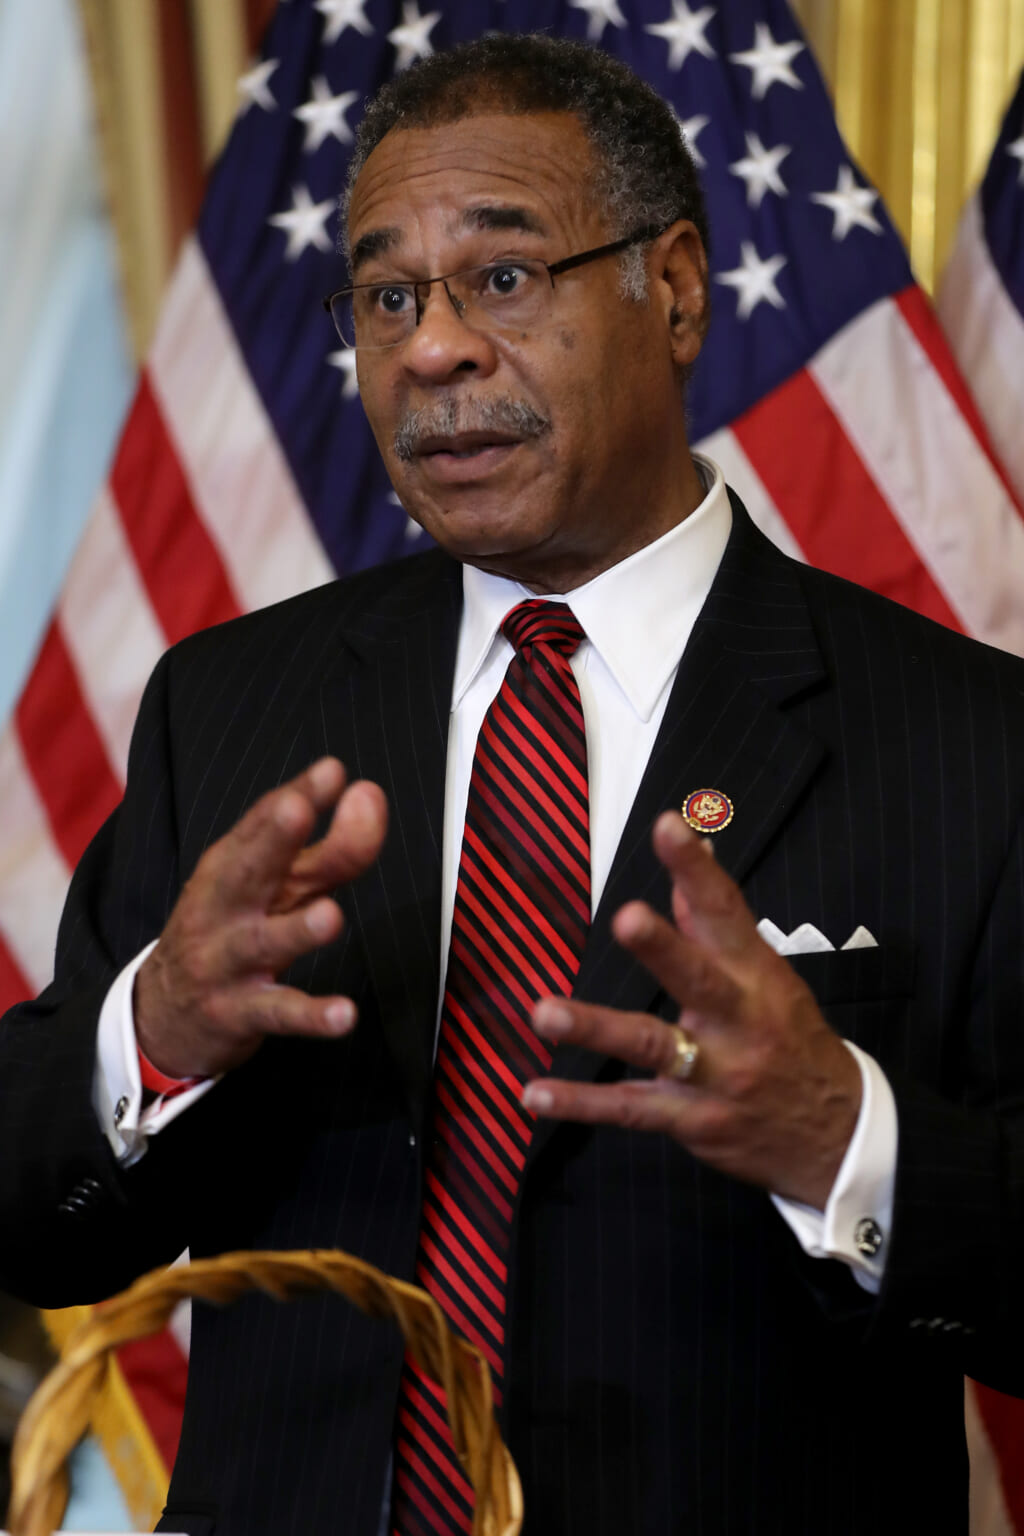 Black lawmakers pressure Washington DC lobbyist groups to diversify ranks